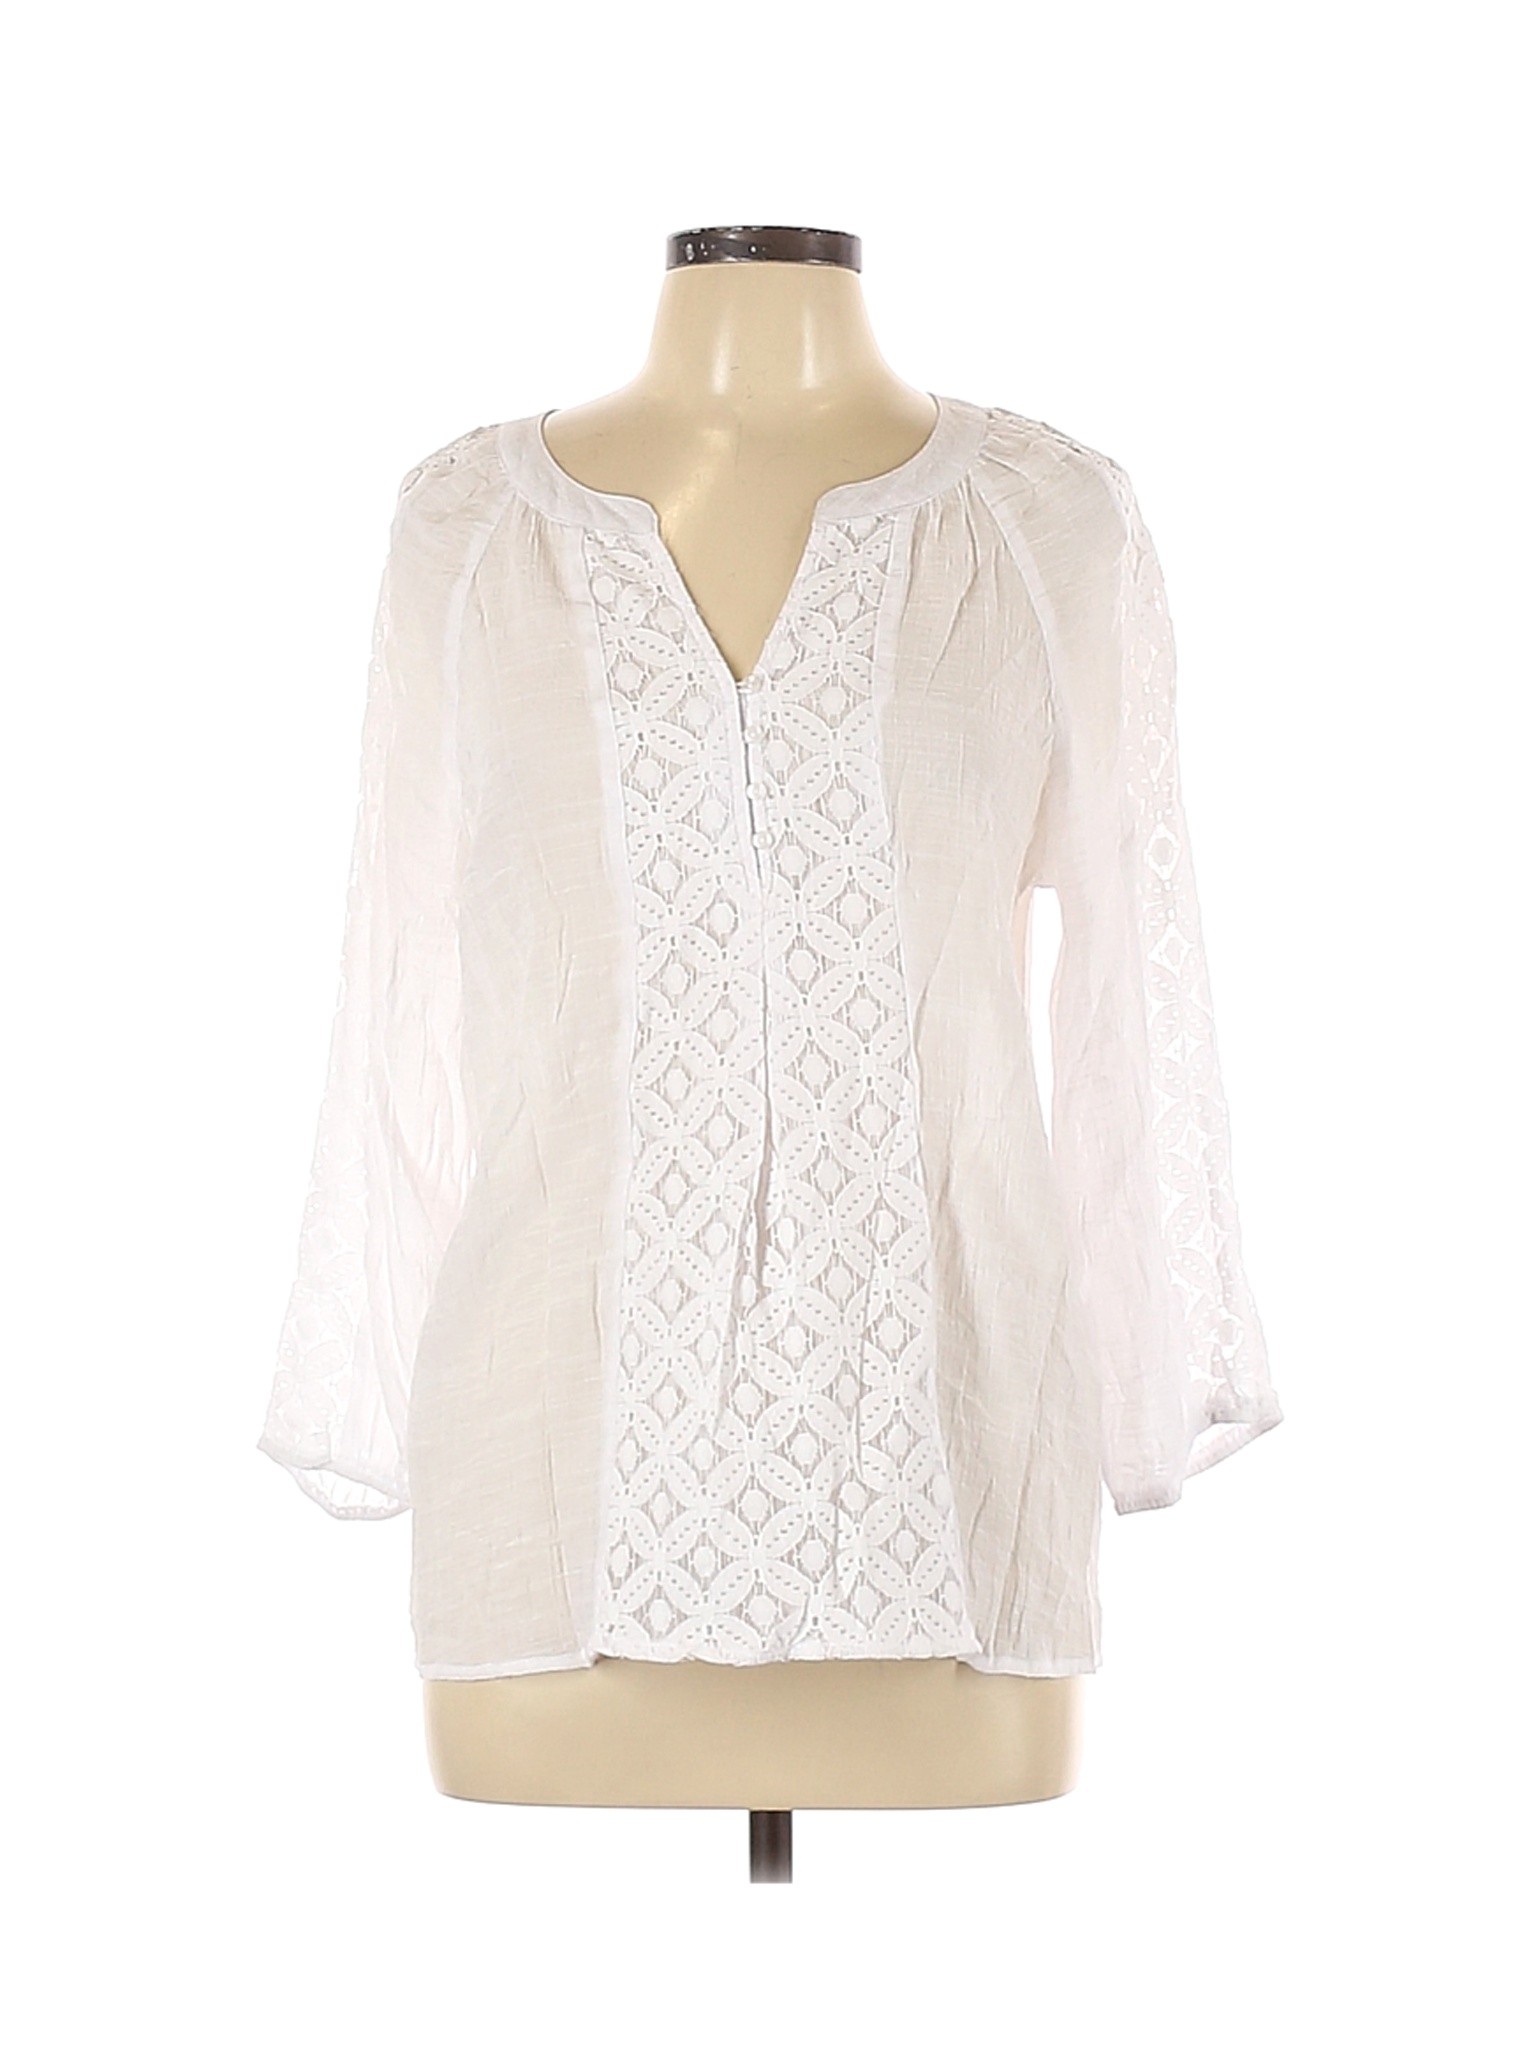 Counterparts Women White Long Sleeve Blouse L | eBay